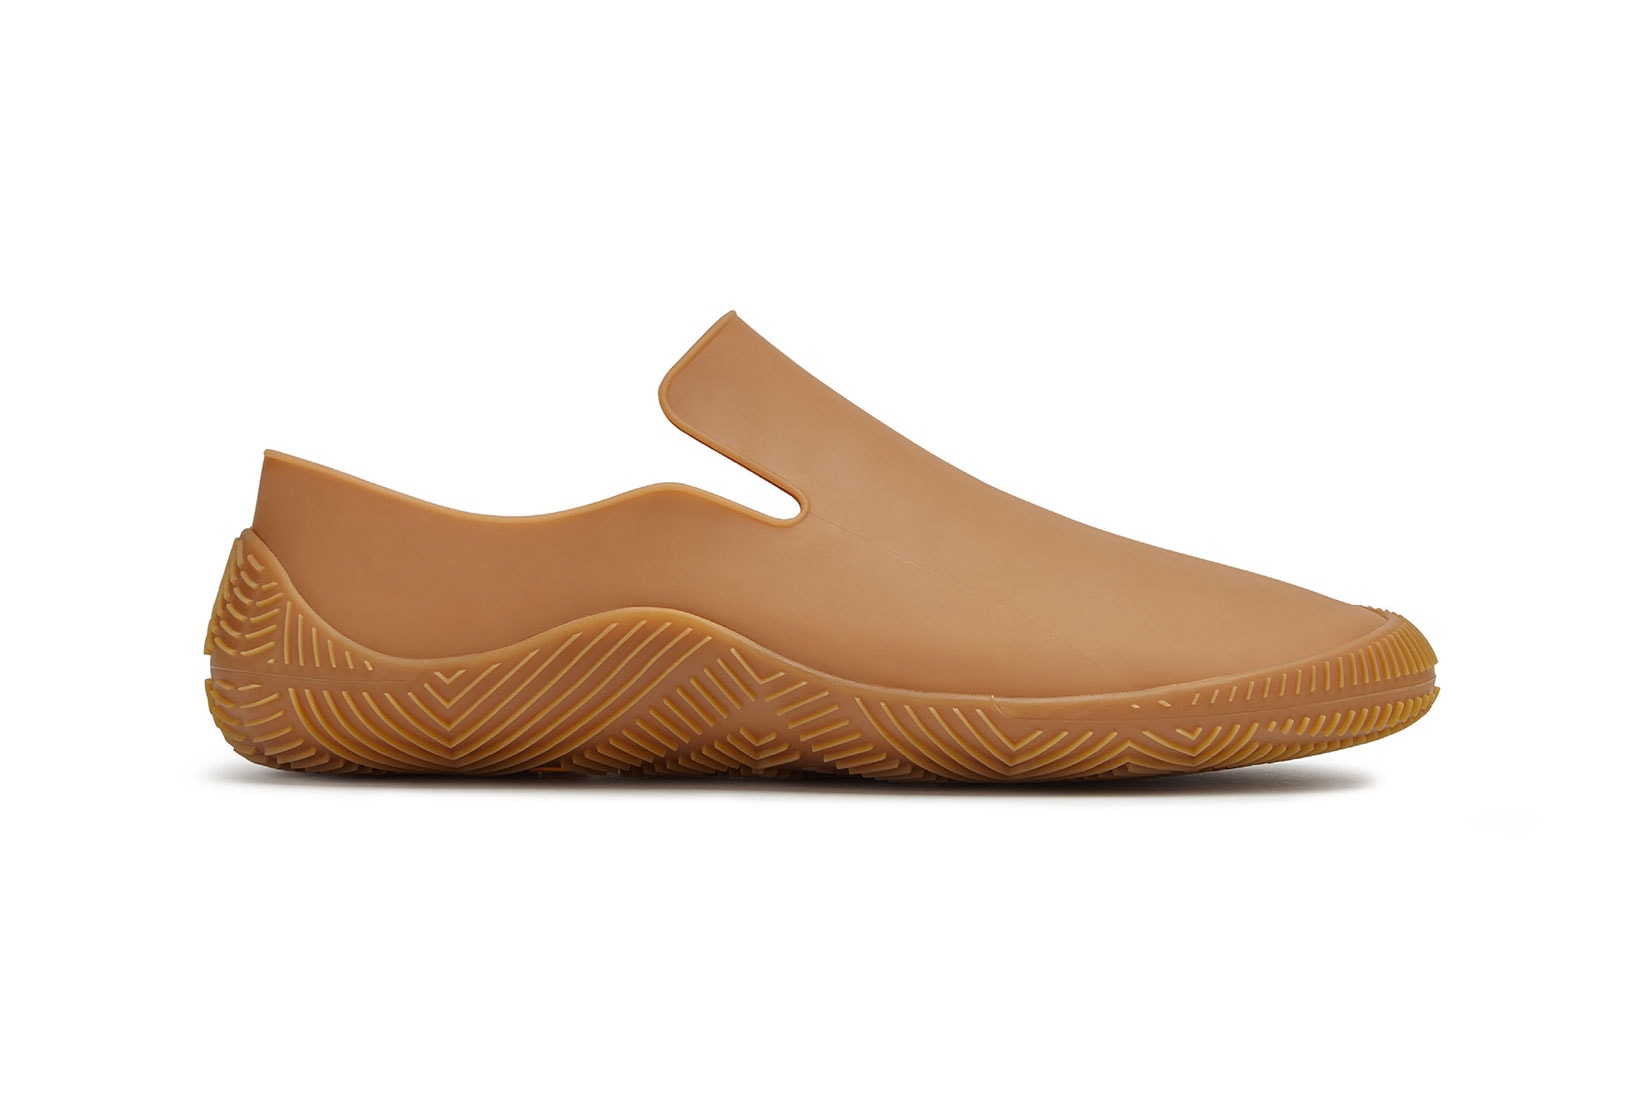 bottega veneta salon 01 footwear collection daniel lee second skin tan rubber